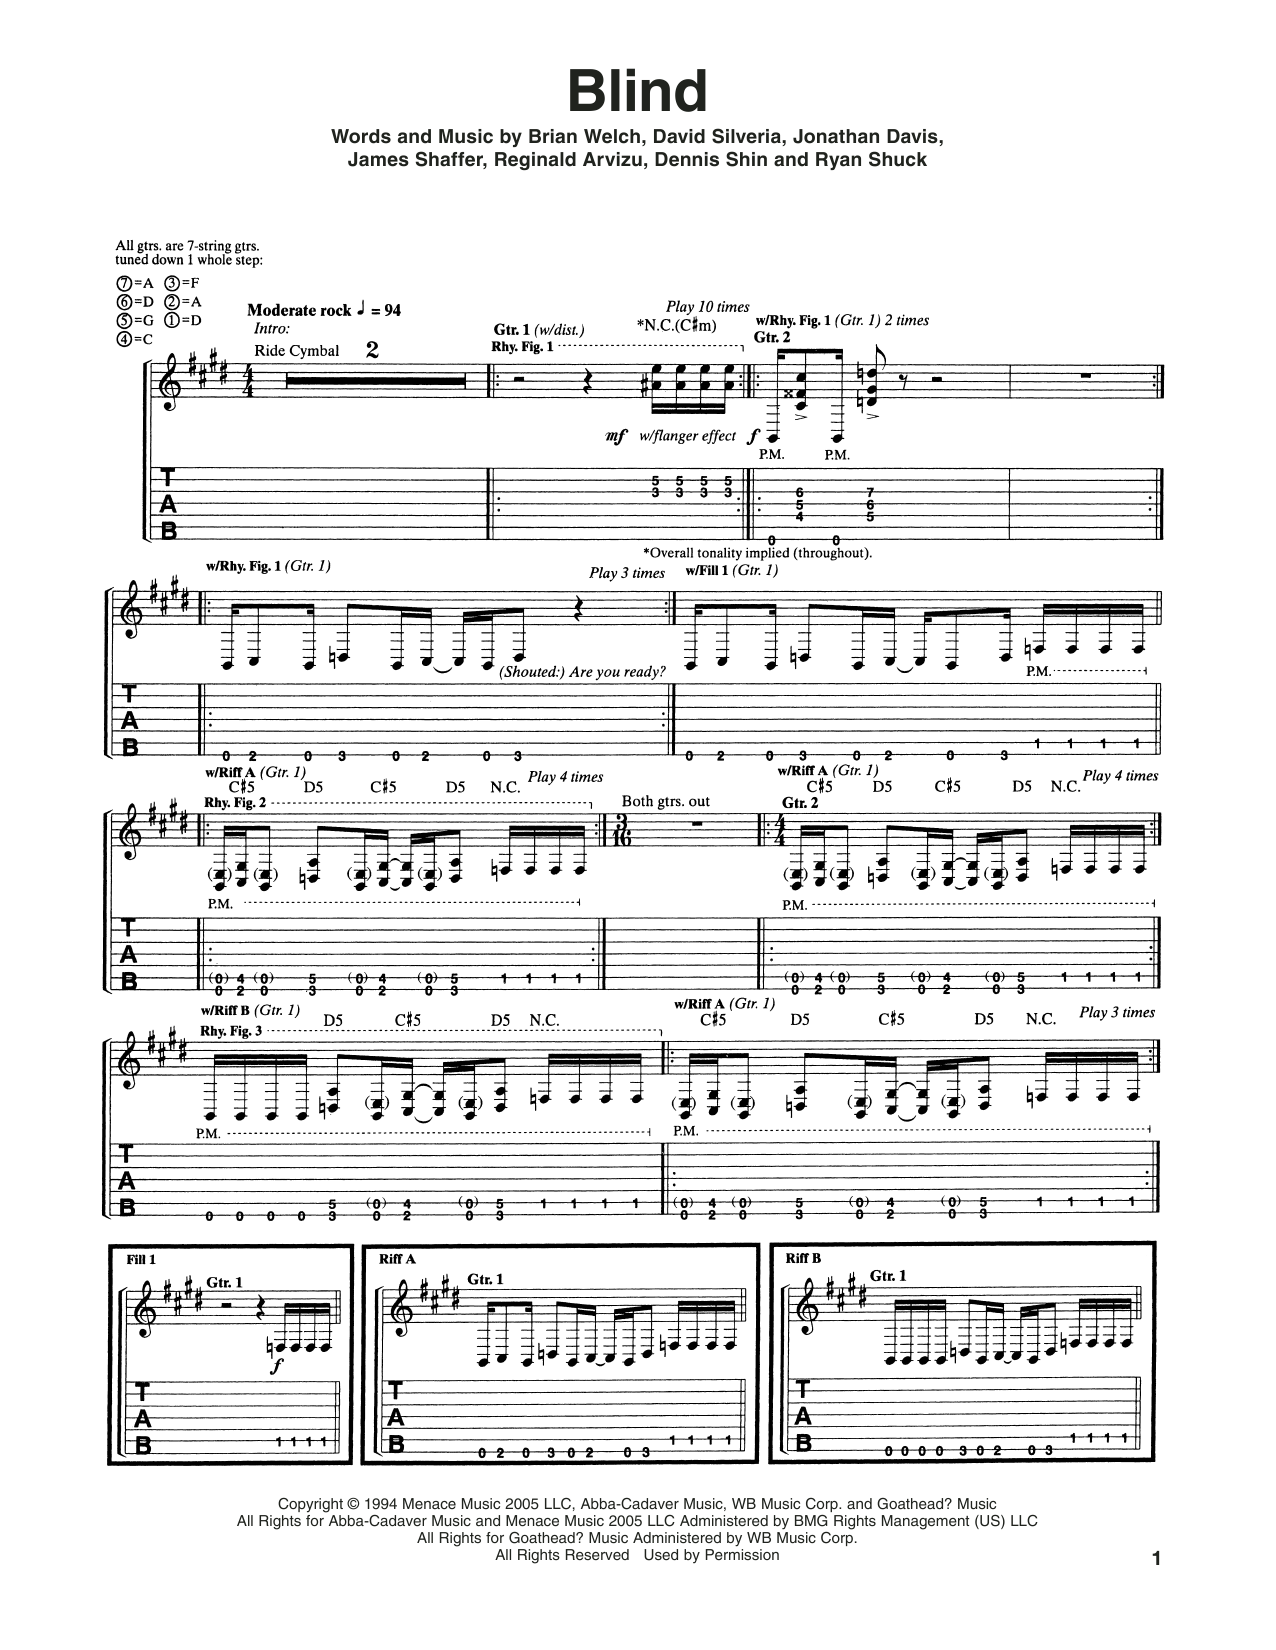 Korn Blind Sheet Music Notes & Chords for Guitar Tab - Download or Print PDF